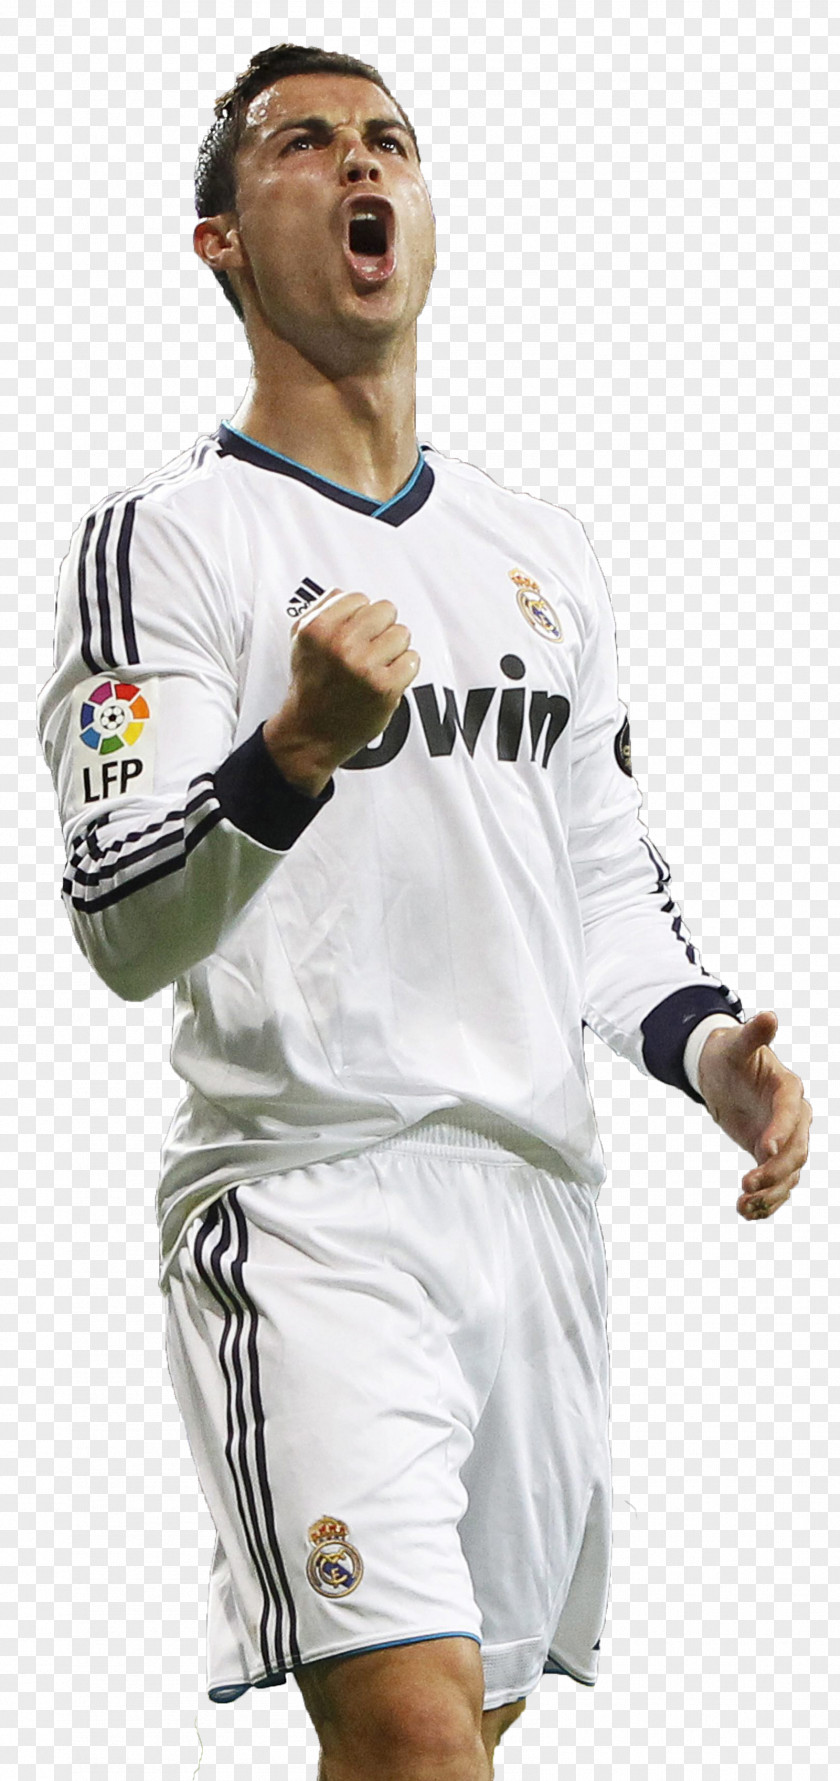 Footballer Cristiano Ronaldo Real Madrid C.F. Portugal National Football Team Player Clip Art PNG